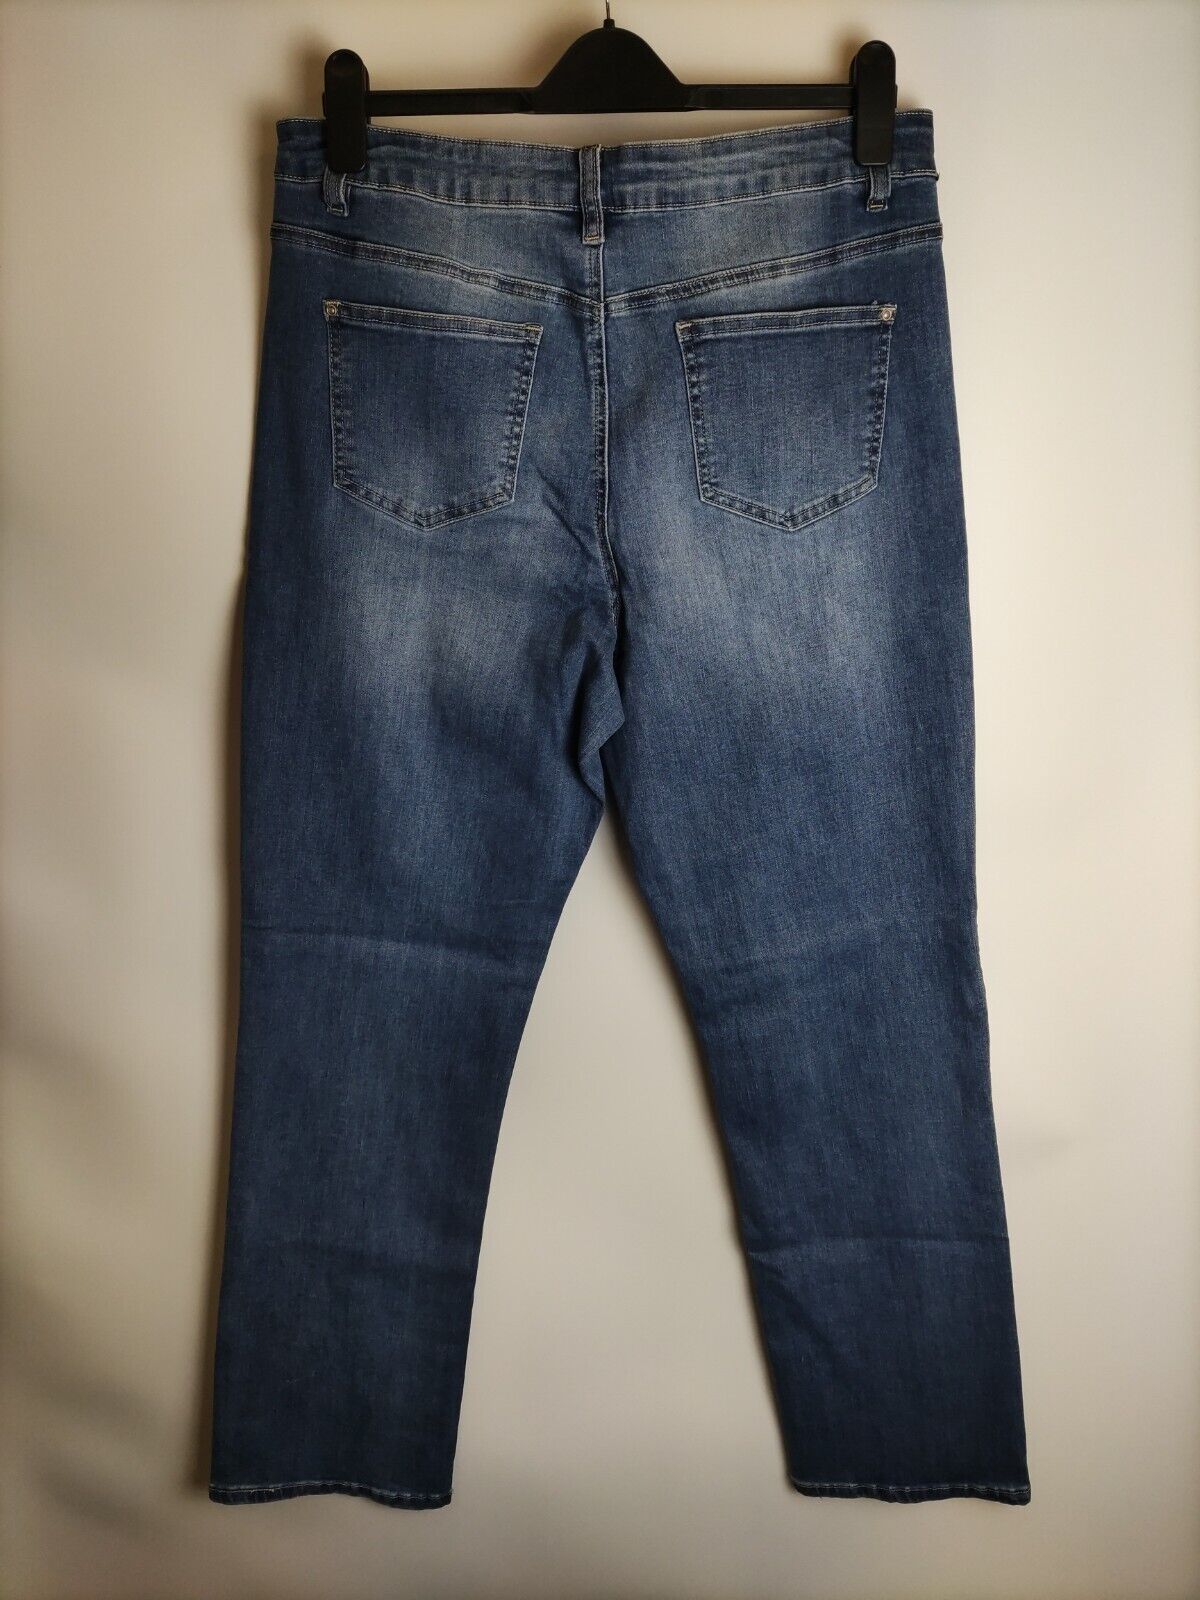 Long Tall Sally London 1976 Jeans. Blue. UK 18. ****V76